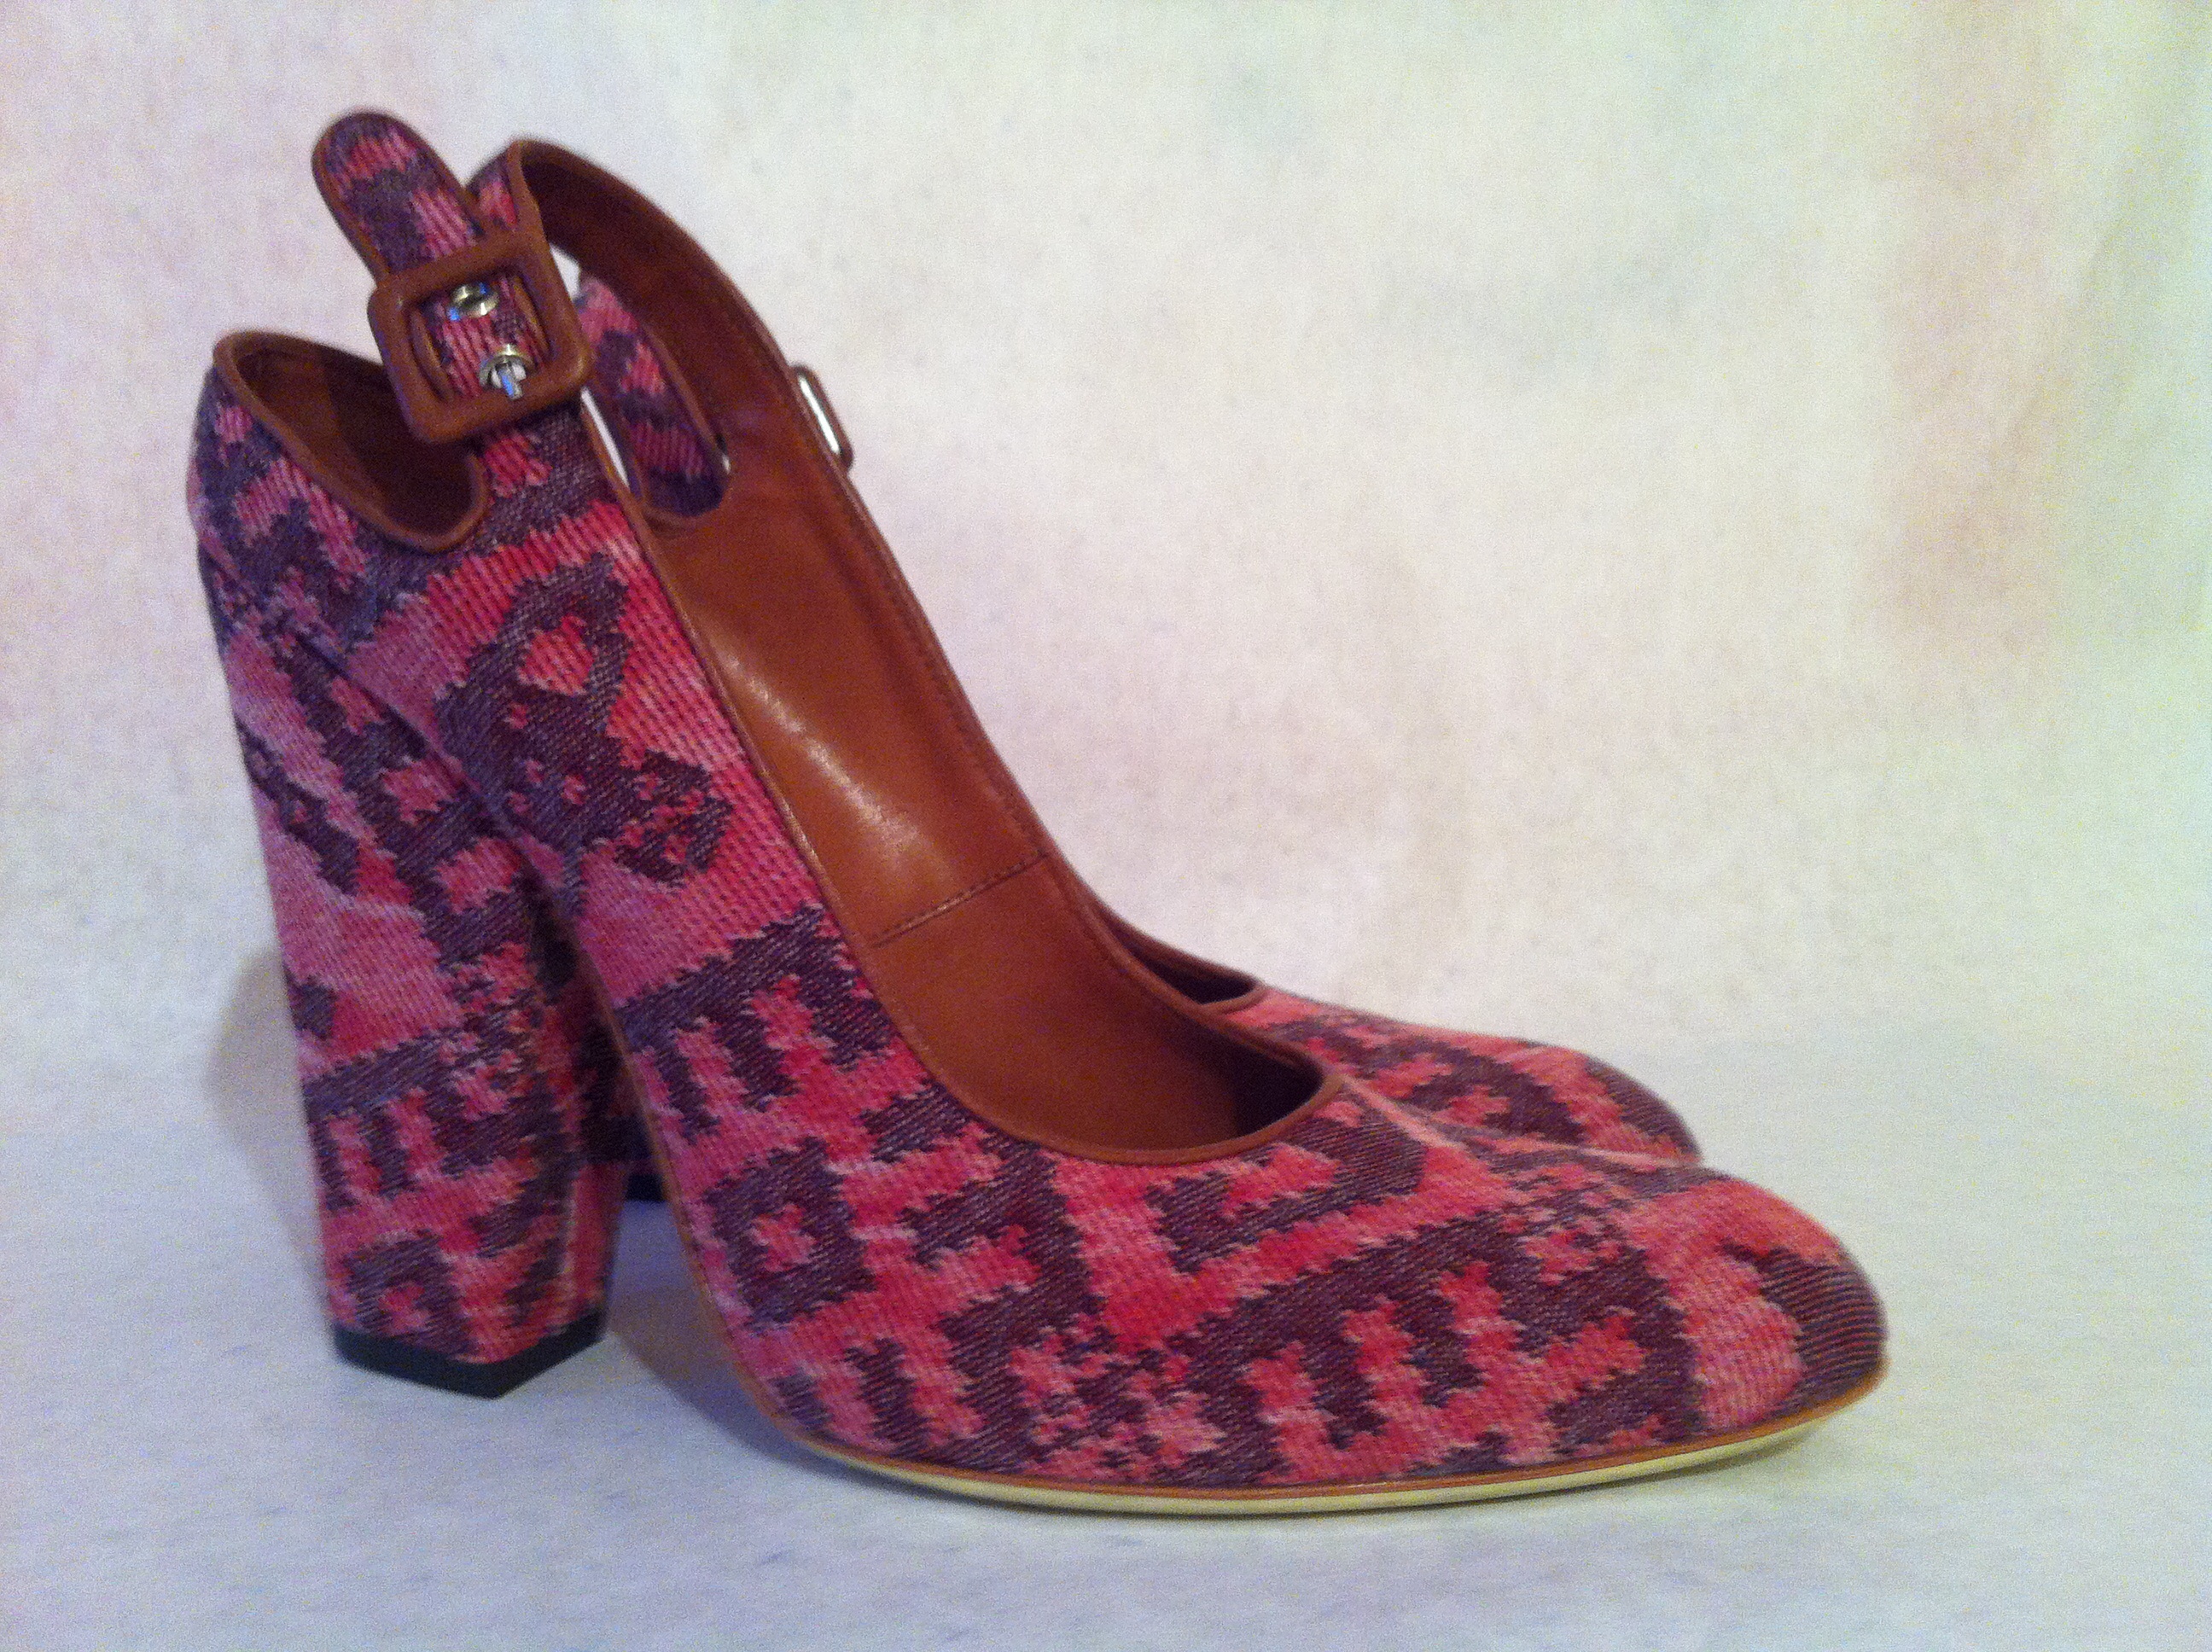 patterned high heels